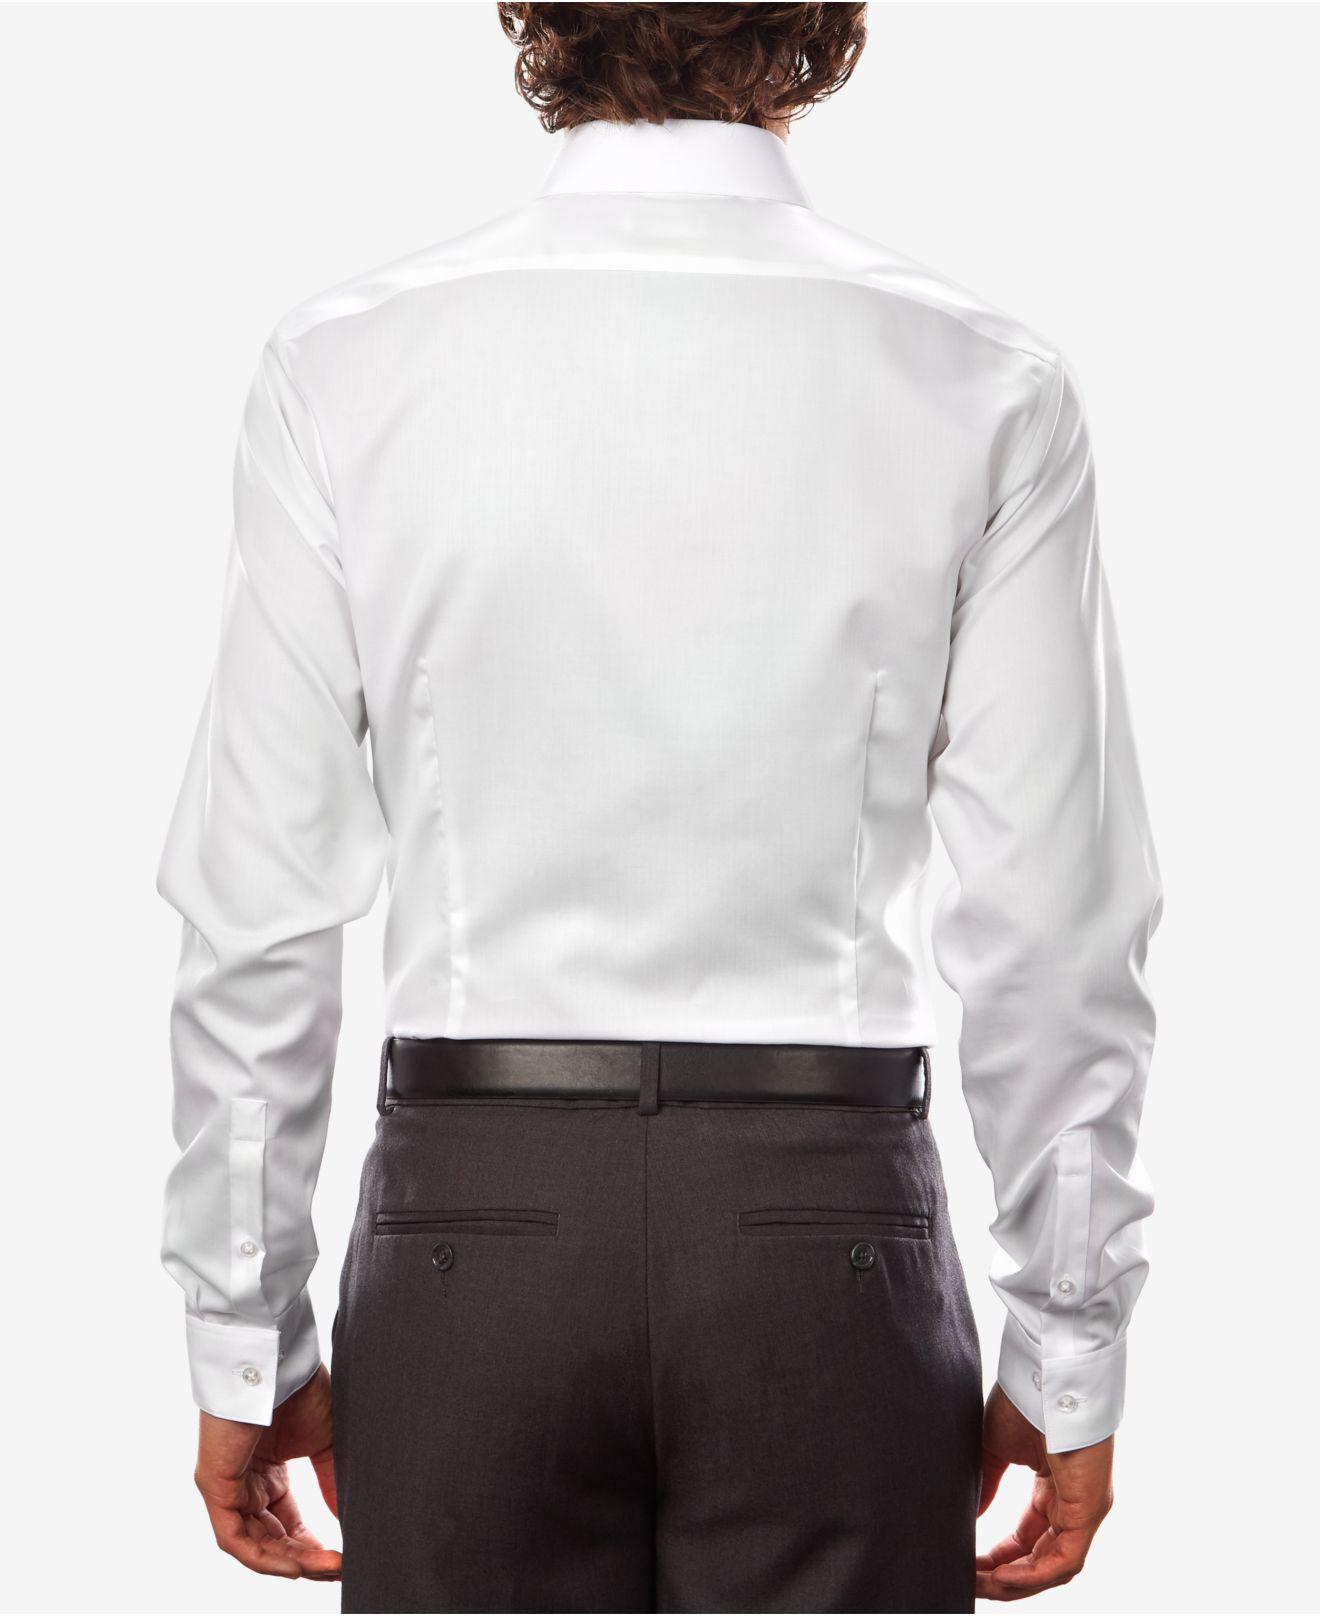 Calvin Klein Steel Extra-slim Fit Non-iron Performance Herringbone Dress  Shirt in White for Men | Lyst